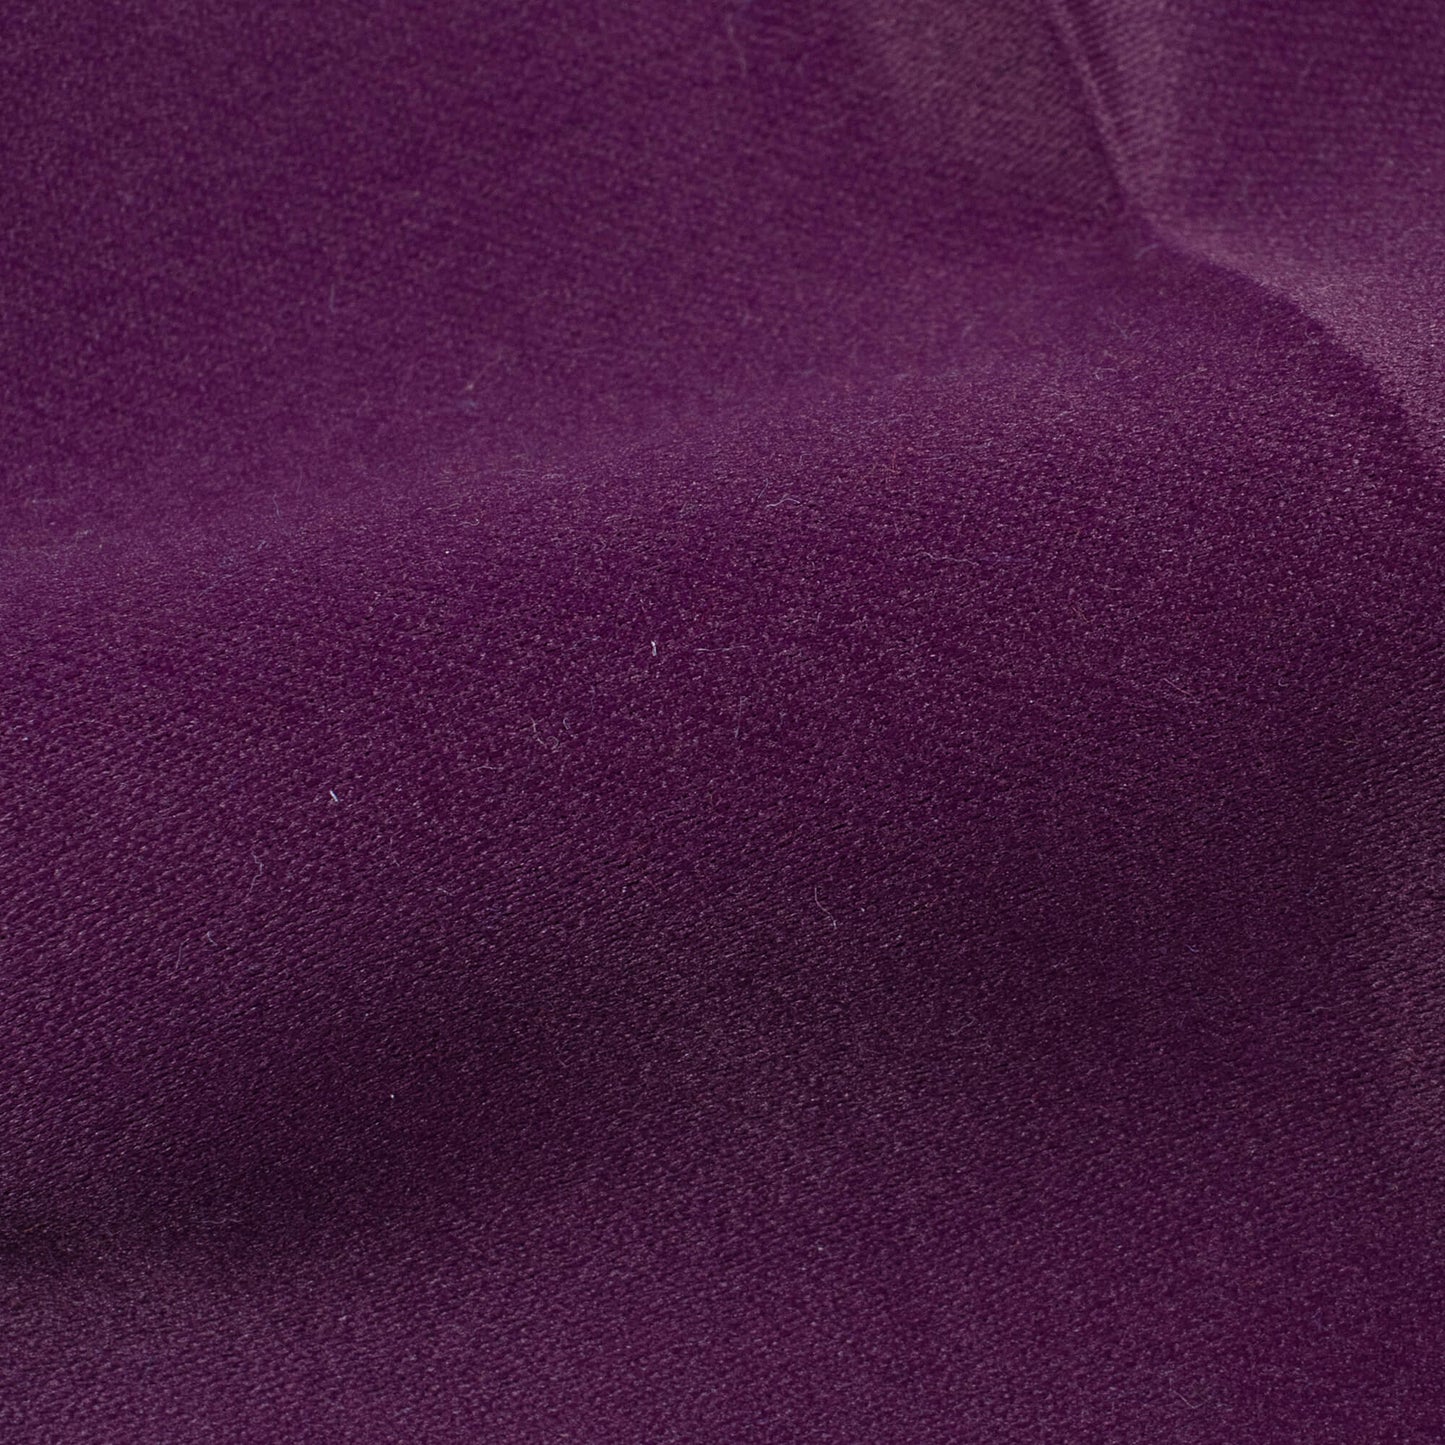 Plum Purple Plain Dense Crepe Satin Exclusive Shirting Fabric (Width 36 Inches)